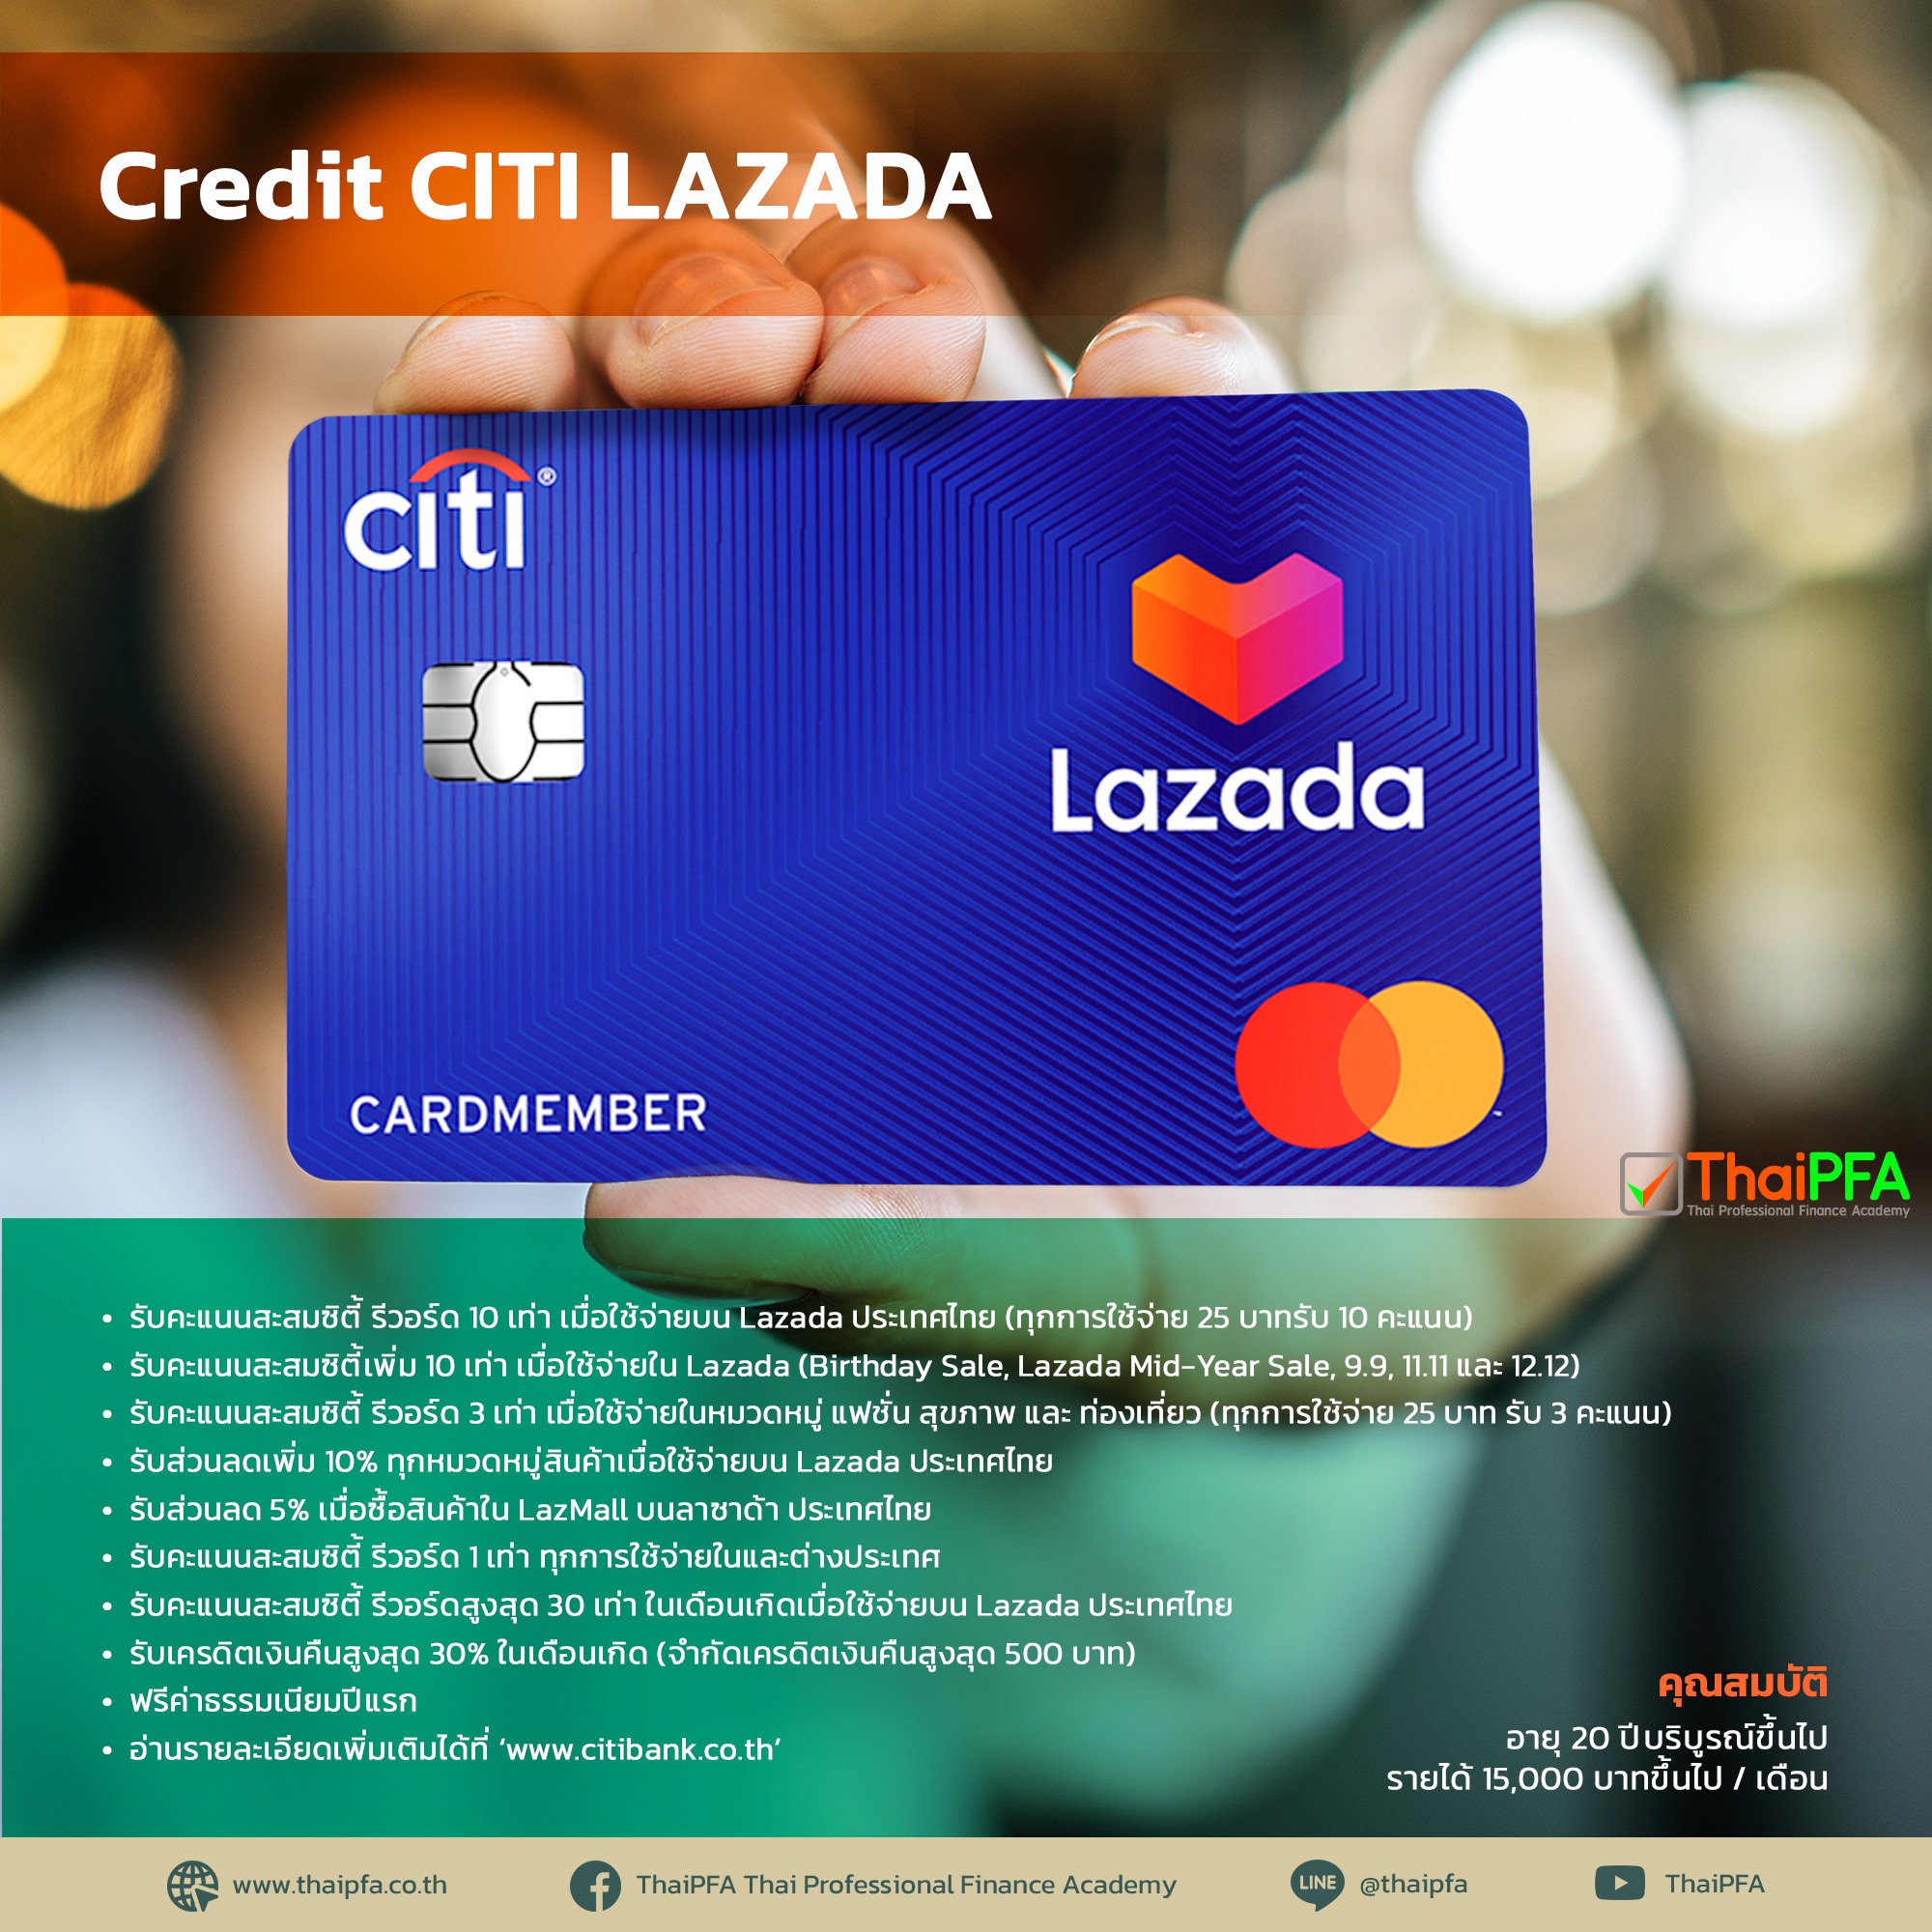 Credit CITI LAZADA บัตรเครดิต